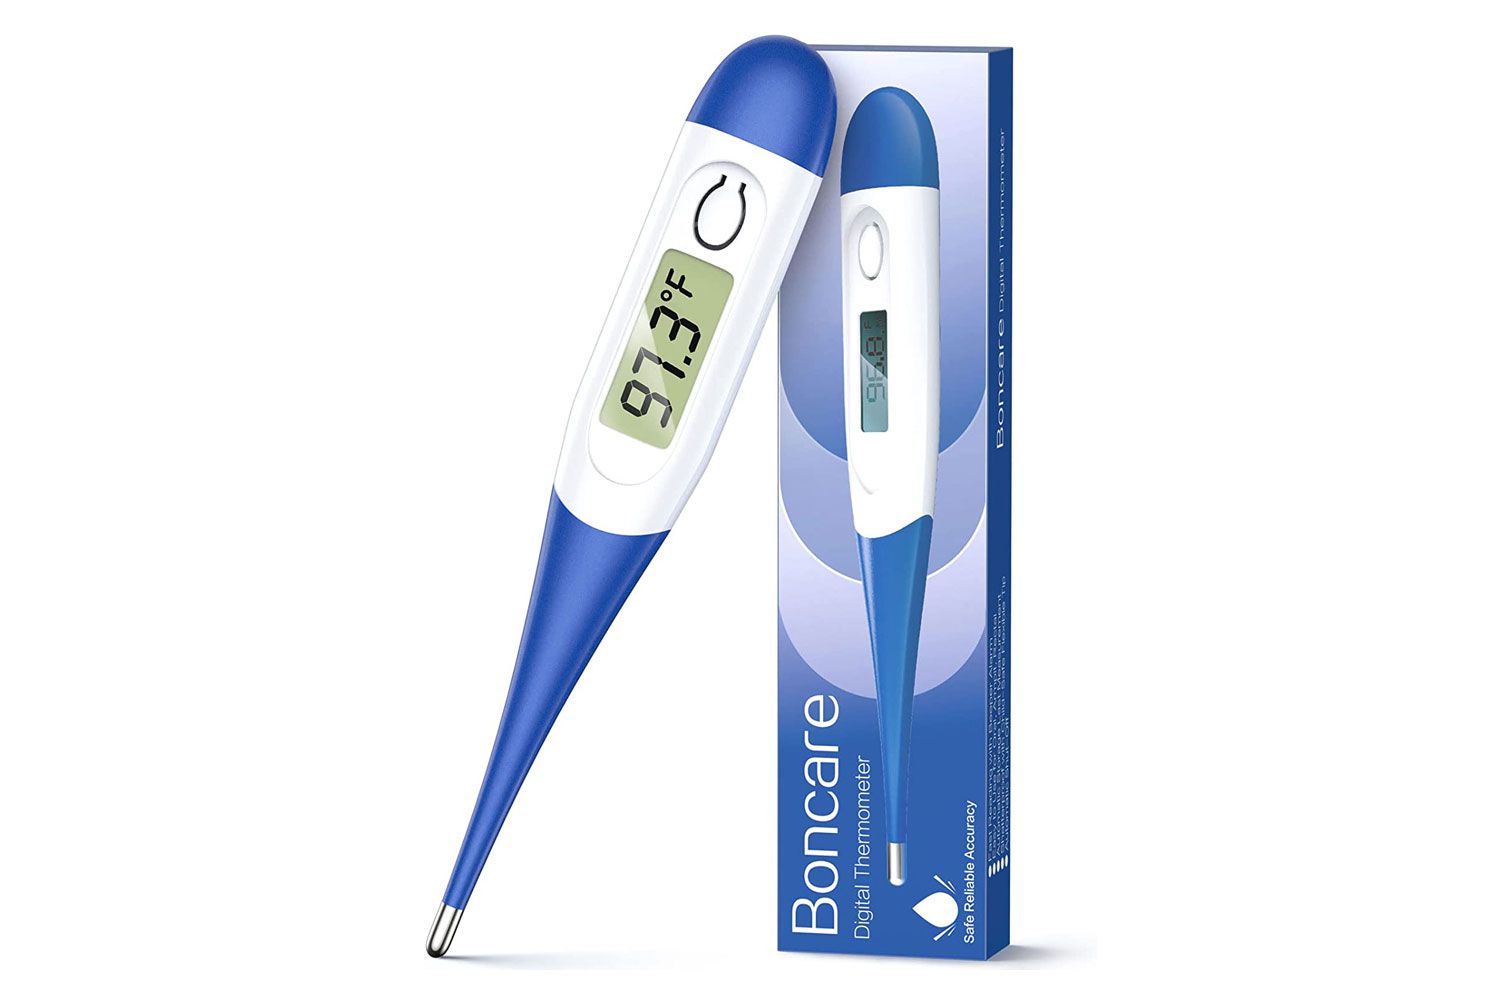 Boncare Digital Thermometer